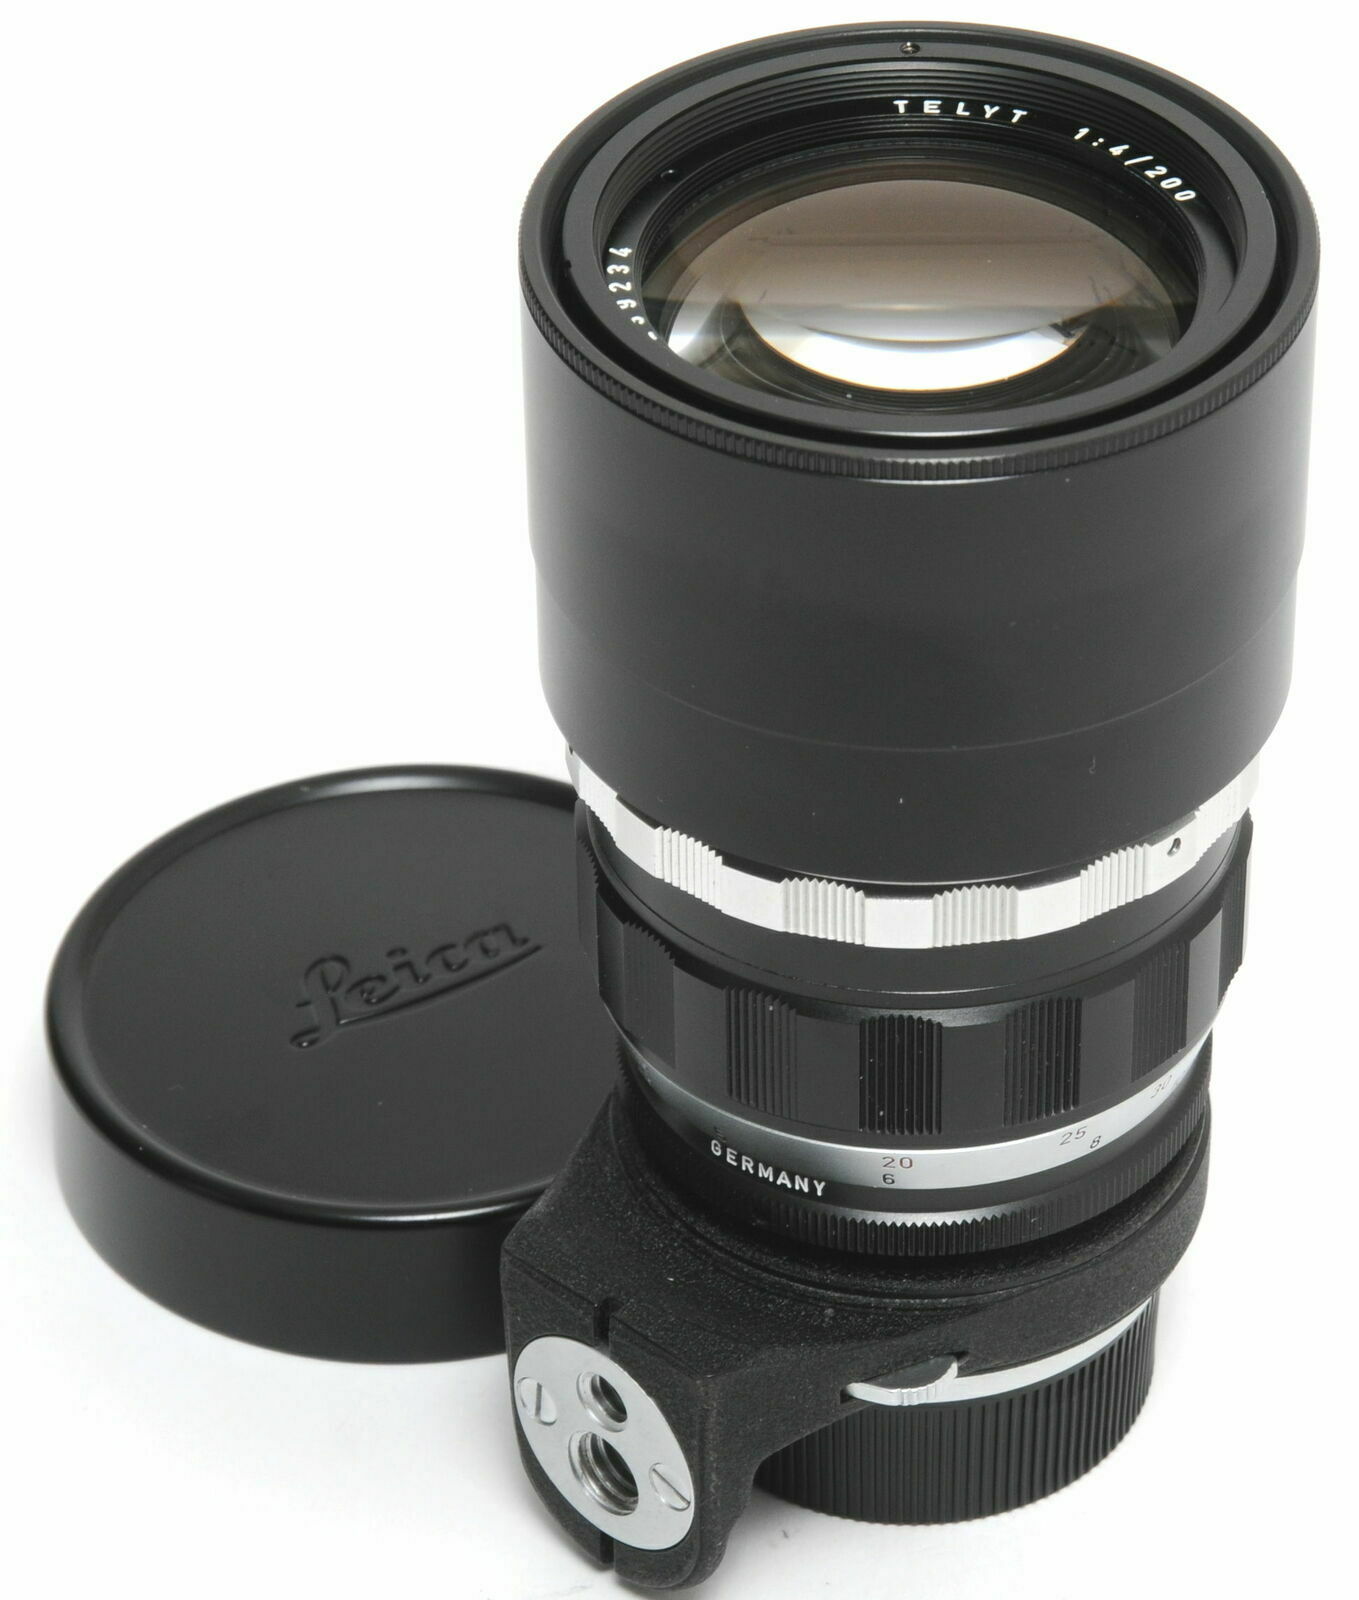 Leica Telyt 4 / 200mm Visoflex W. Leica M Adapter 16466 And Caps